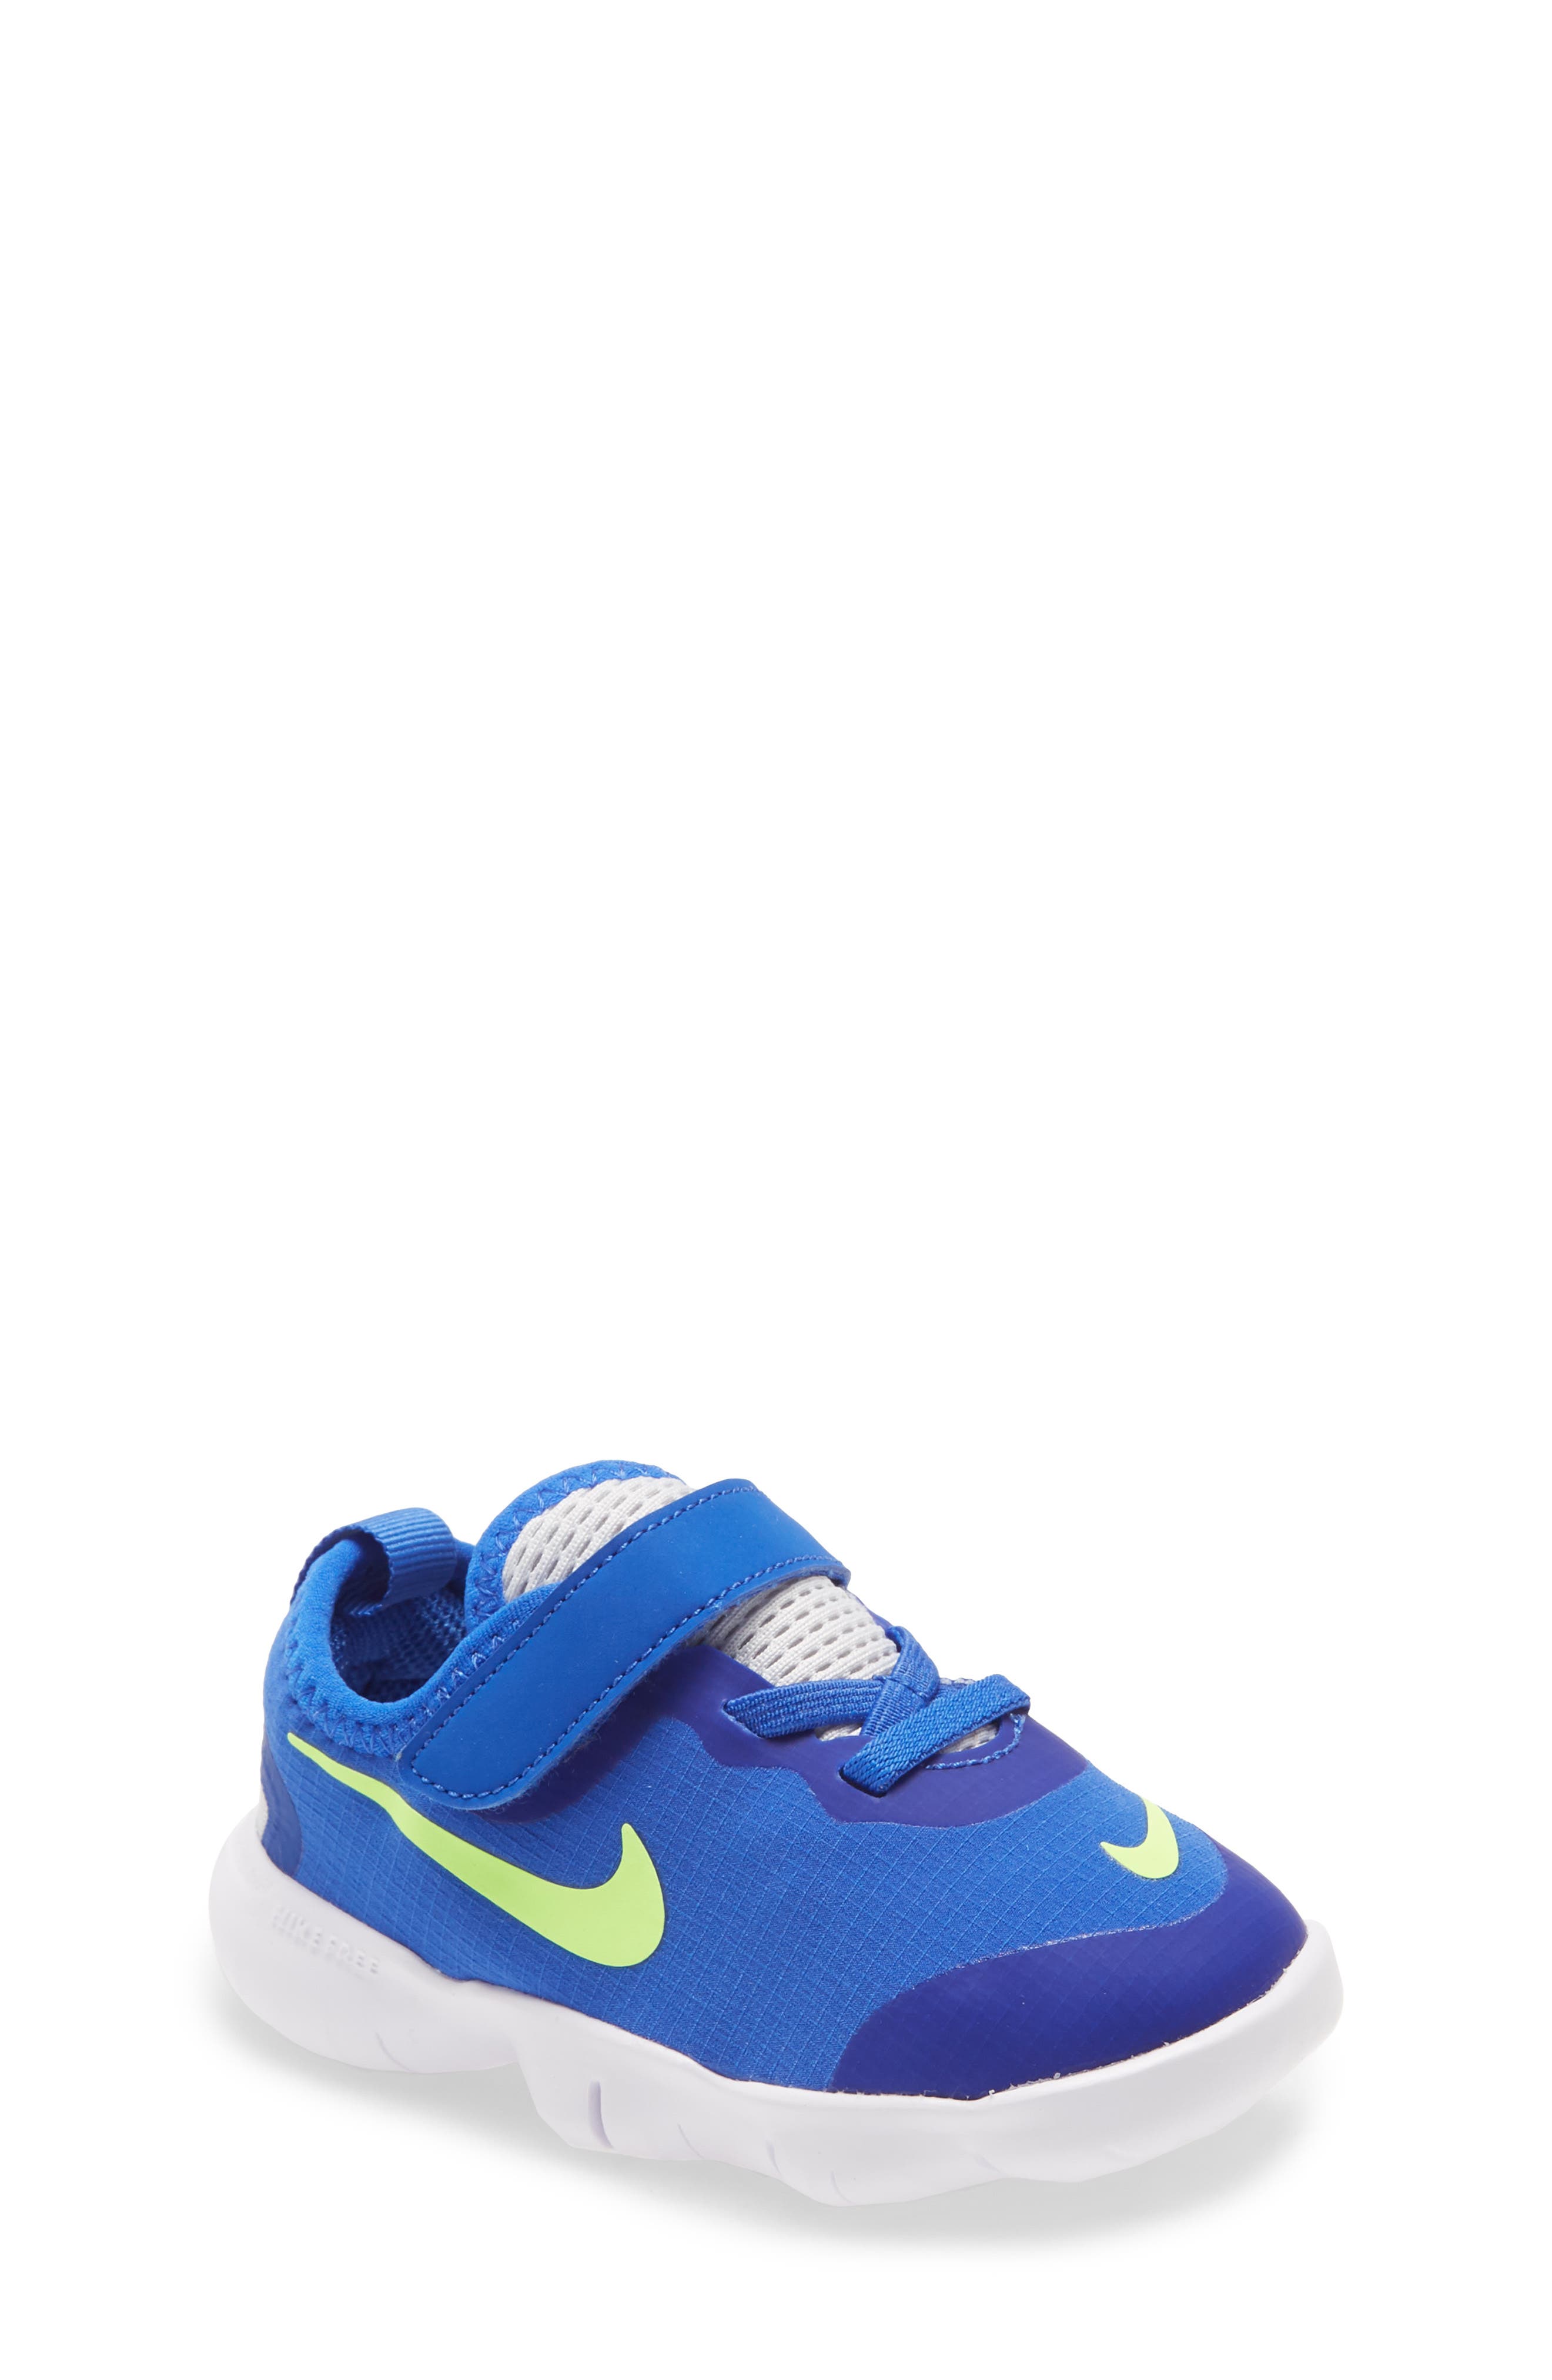 Baby Nike, Walker \u0026 Toddler Shoes 